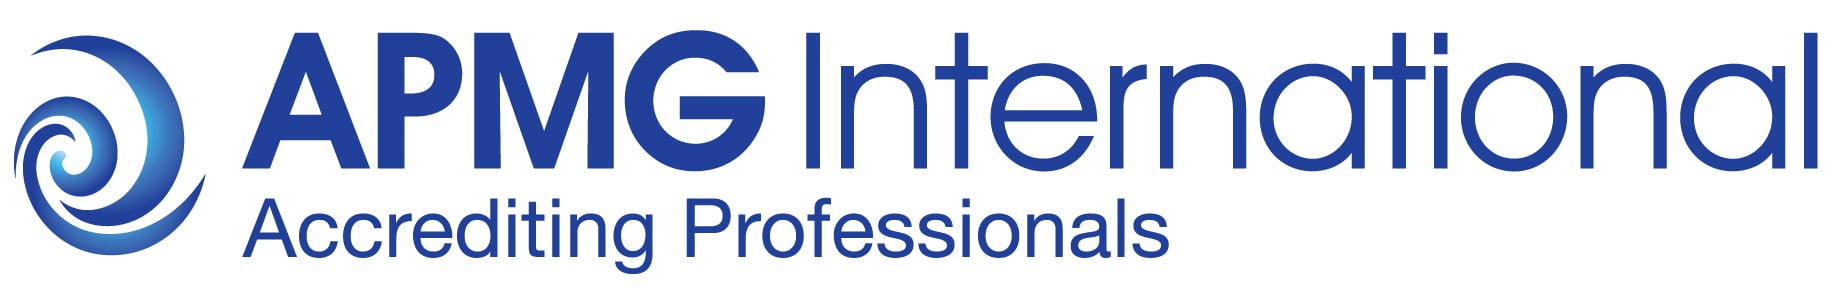 APMG International Logo